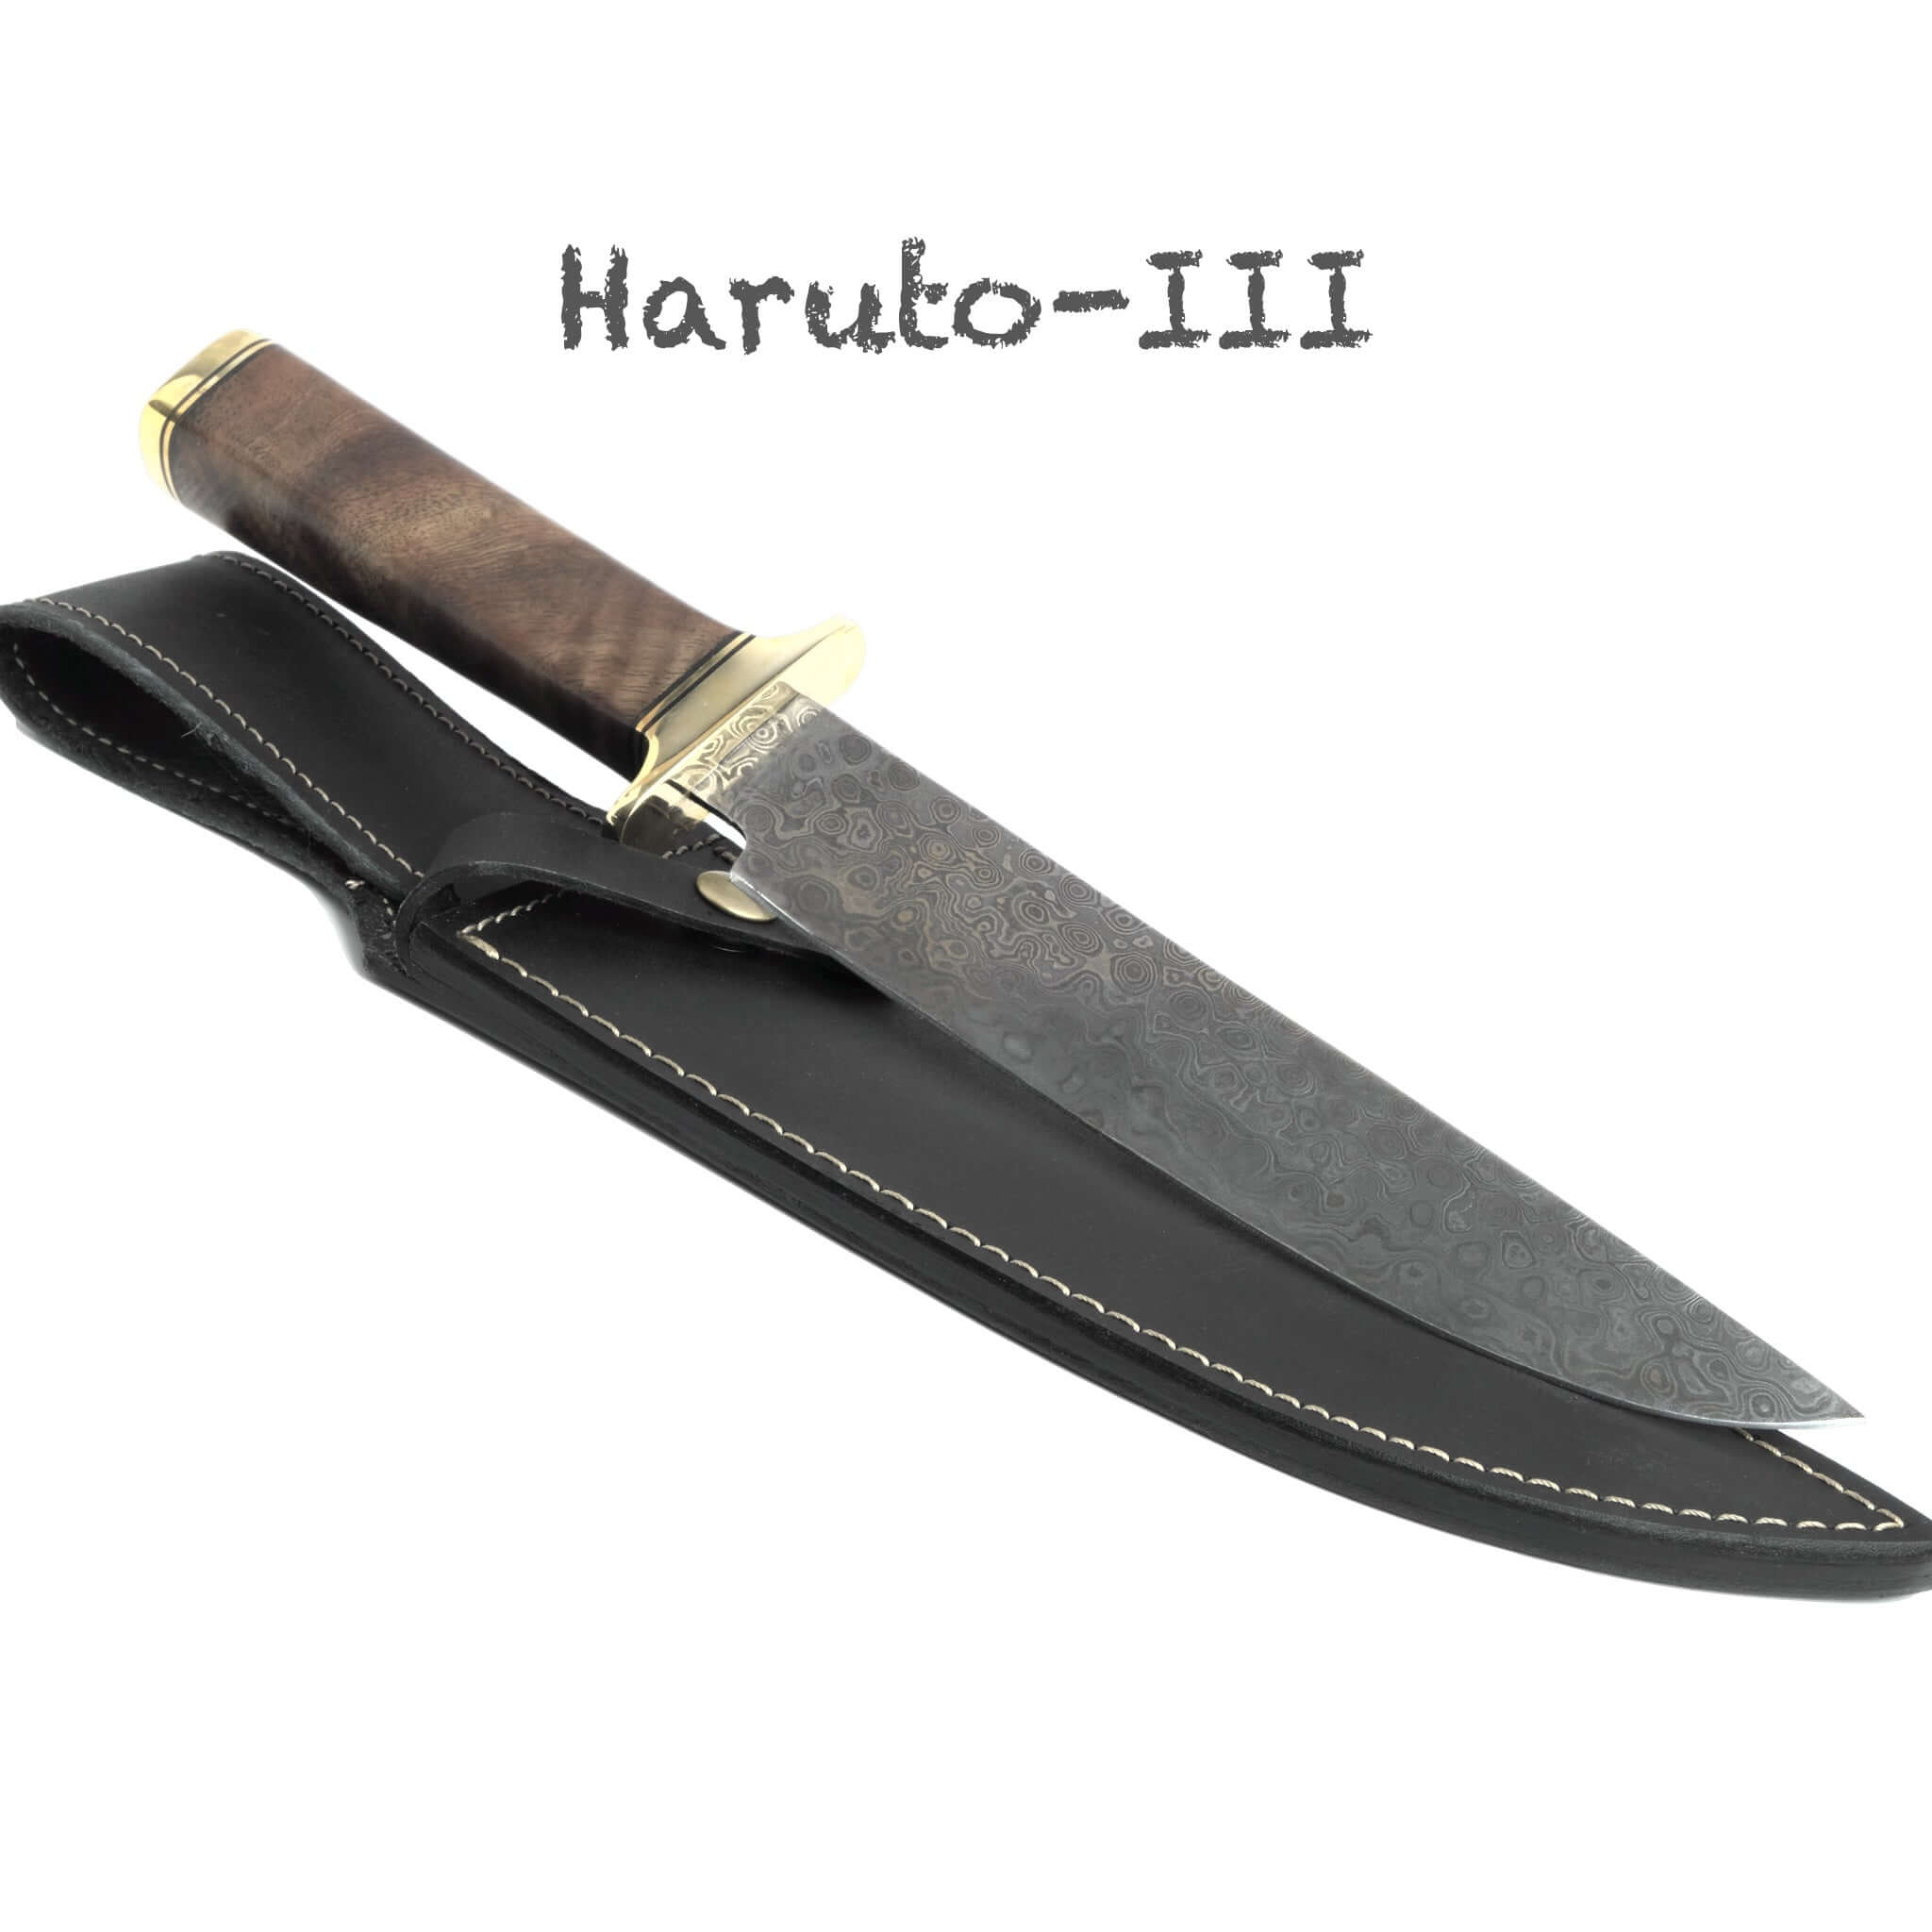 Haruto-III Bowie Knife 9 inch Blade